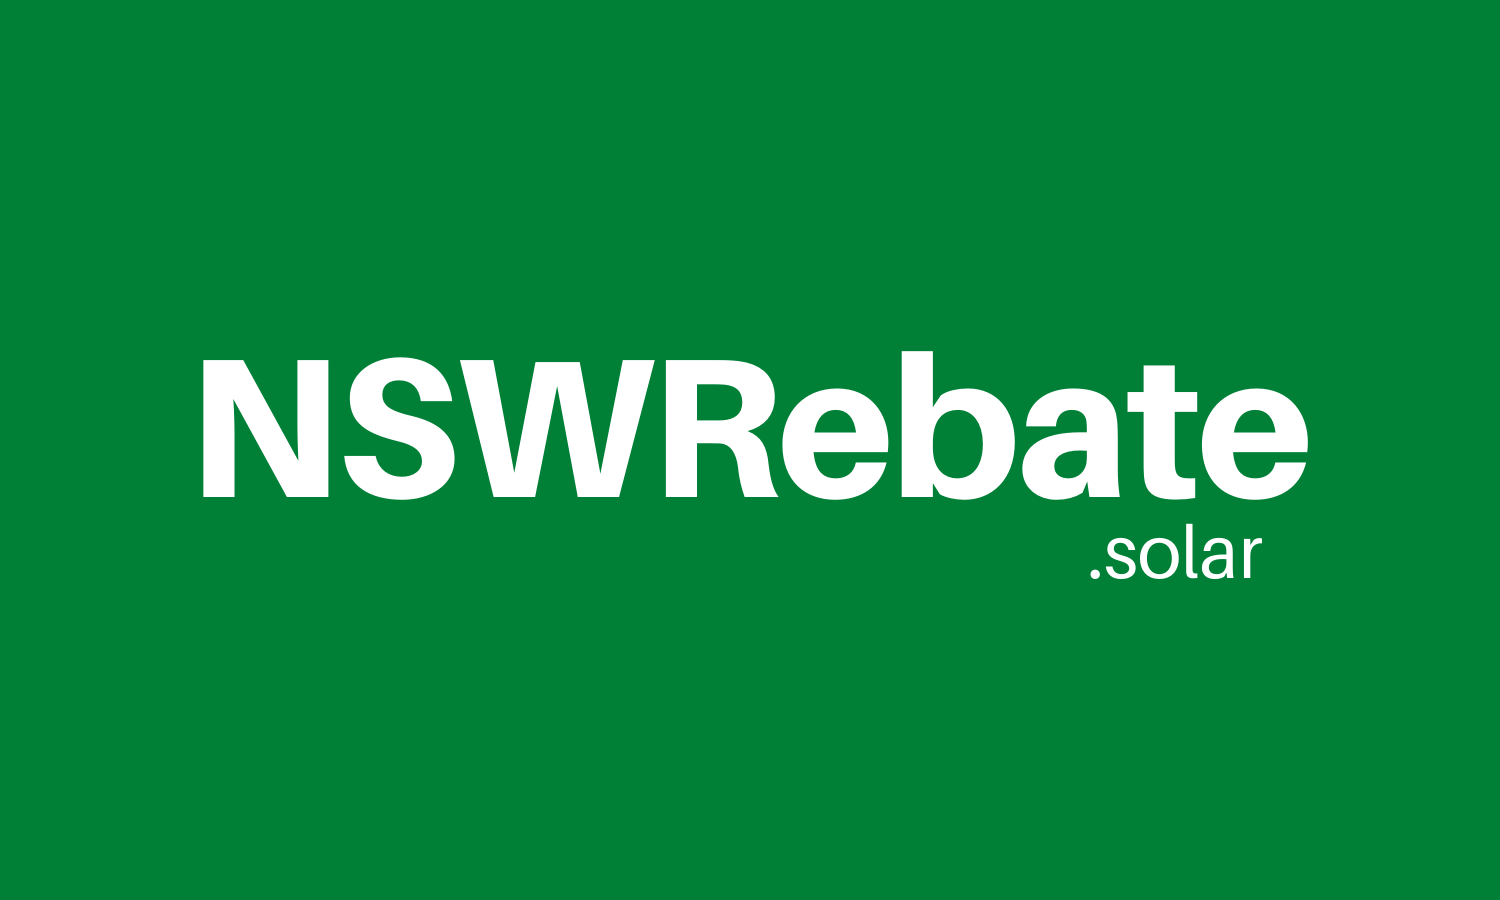 Newcastle NSW Rebate Solar